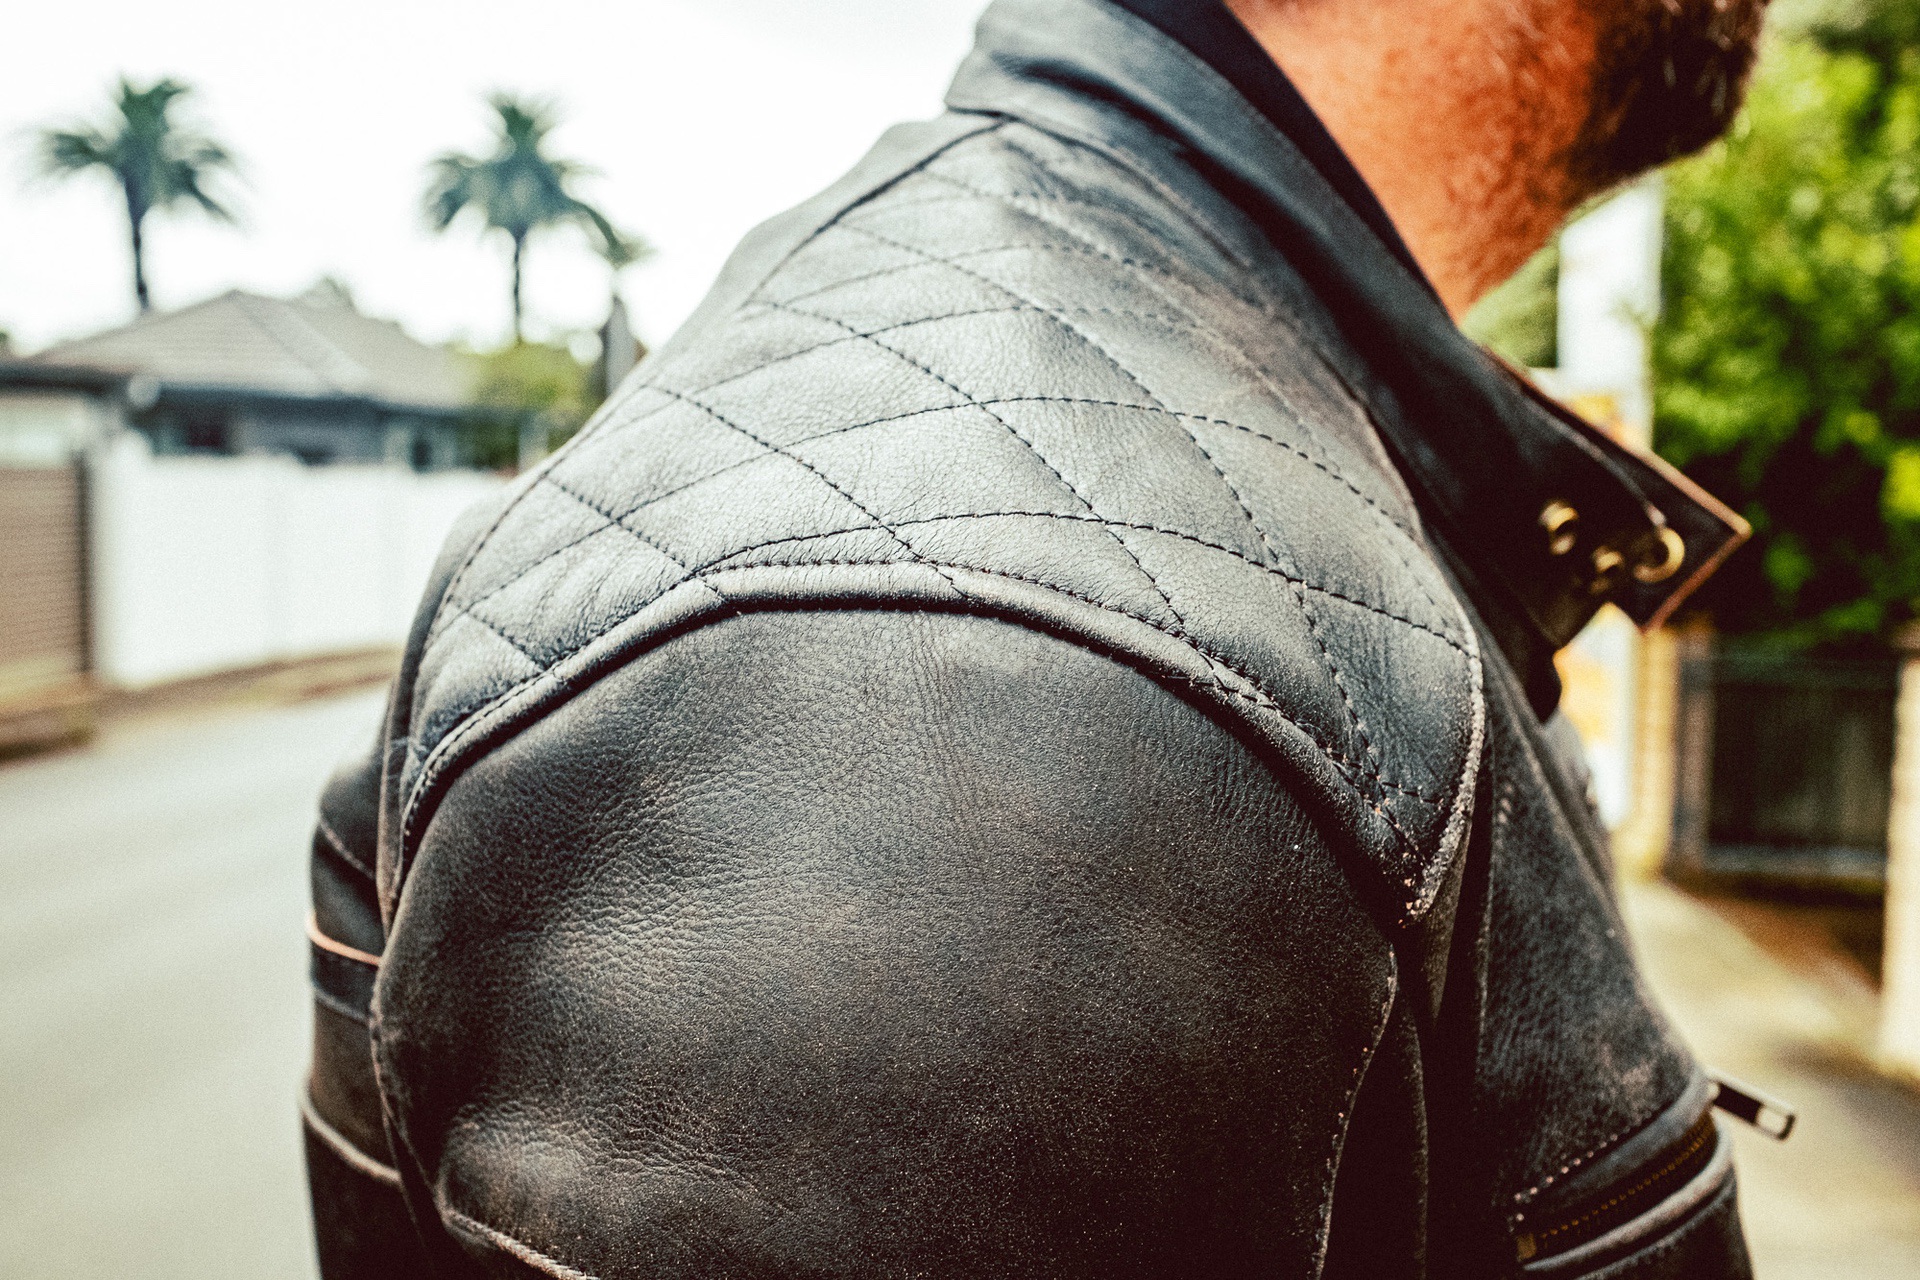 Right shoulder of man wearing ol Bobber Leather Jacket by Black Pup Moto